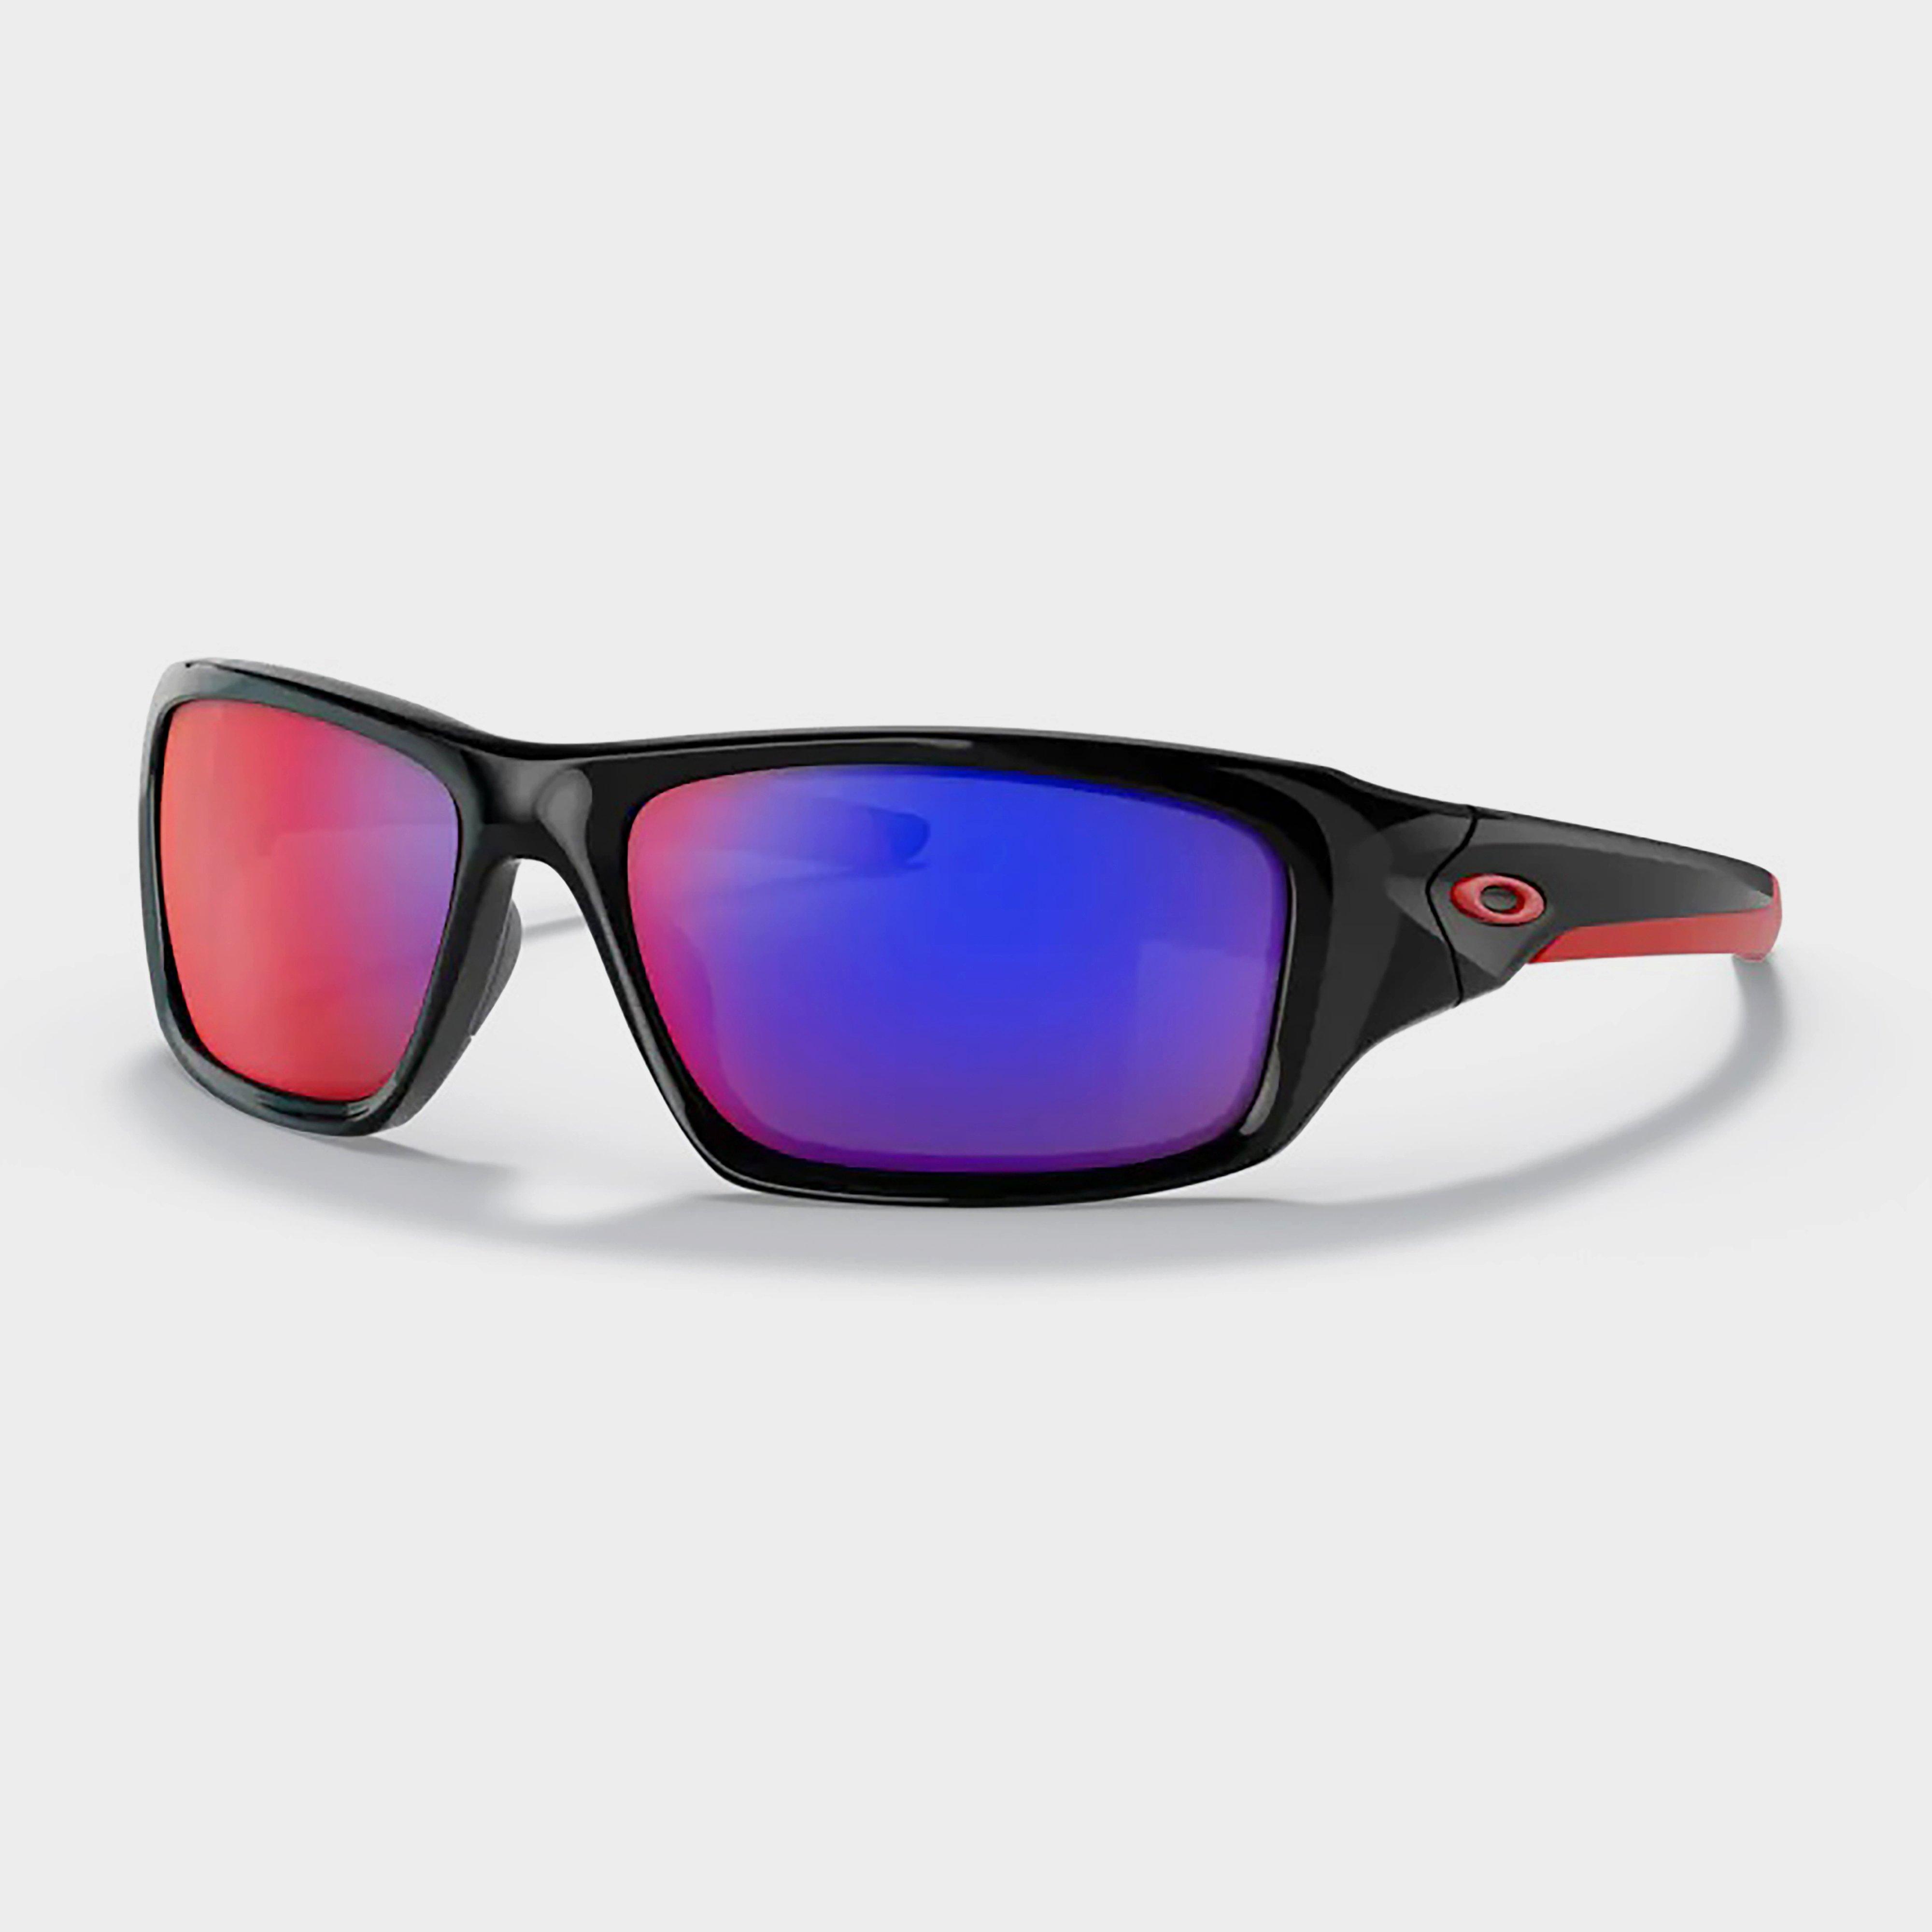  Oakley Valve Sunglasses, Black